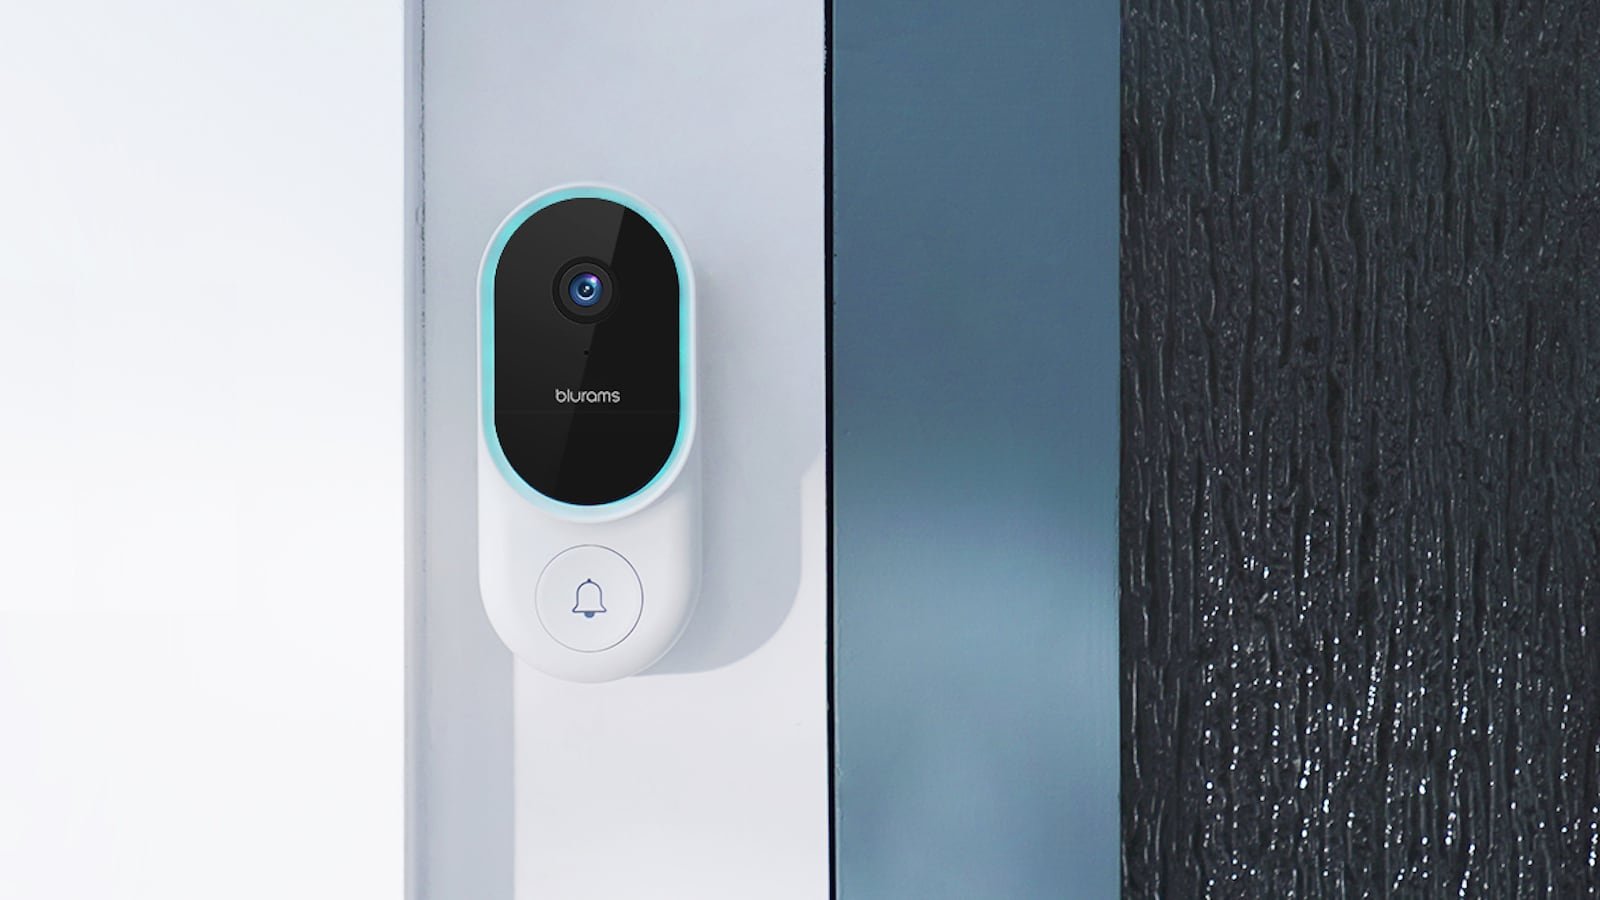 Blurams Smart Video Doorbell home security camera has human recognition